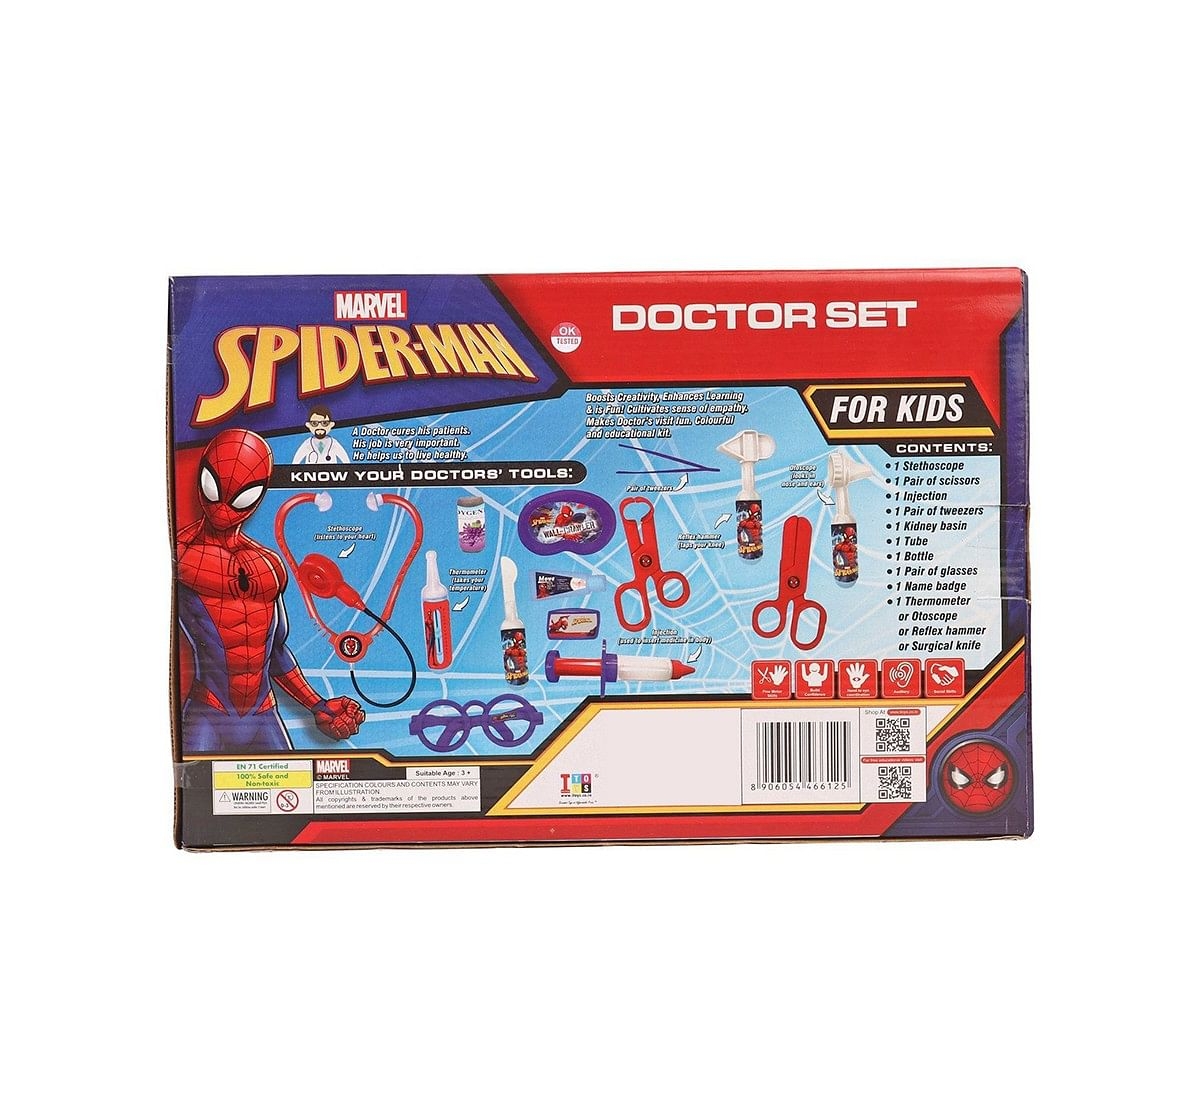 I Toys Spiderman Docter Set Roleplay Sets for Kids Age 4Y+